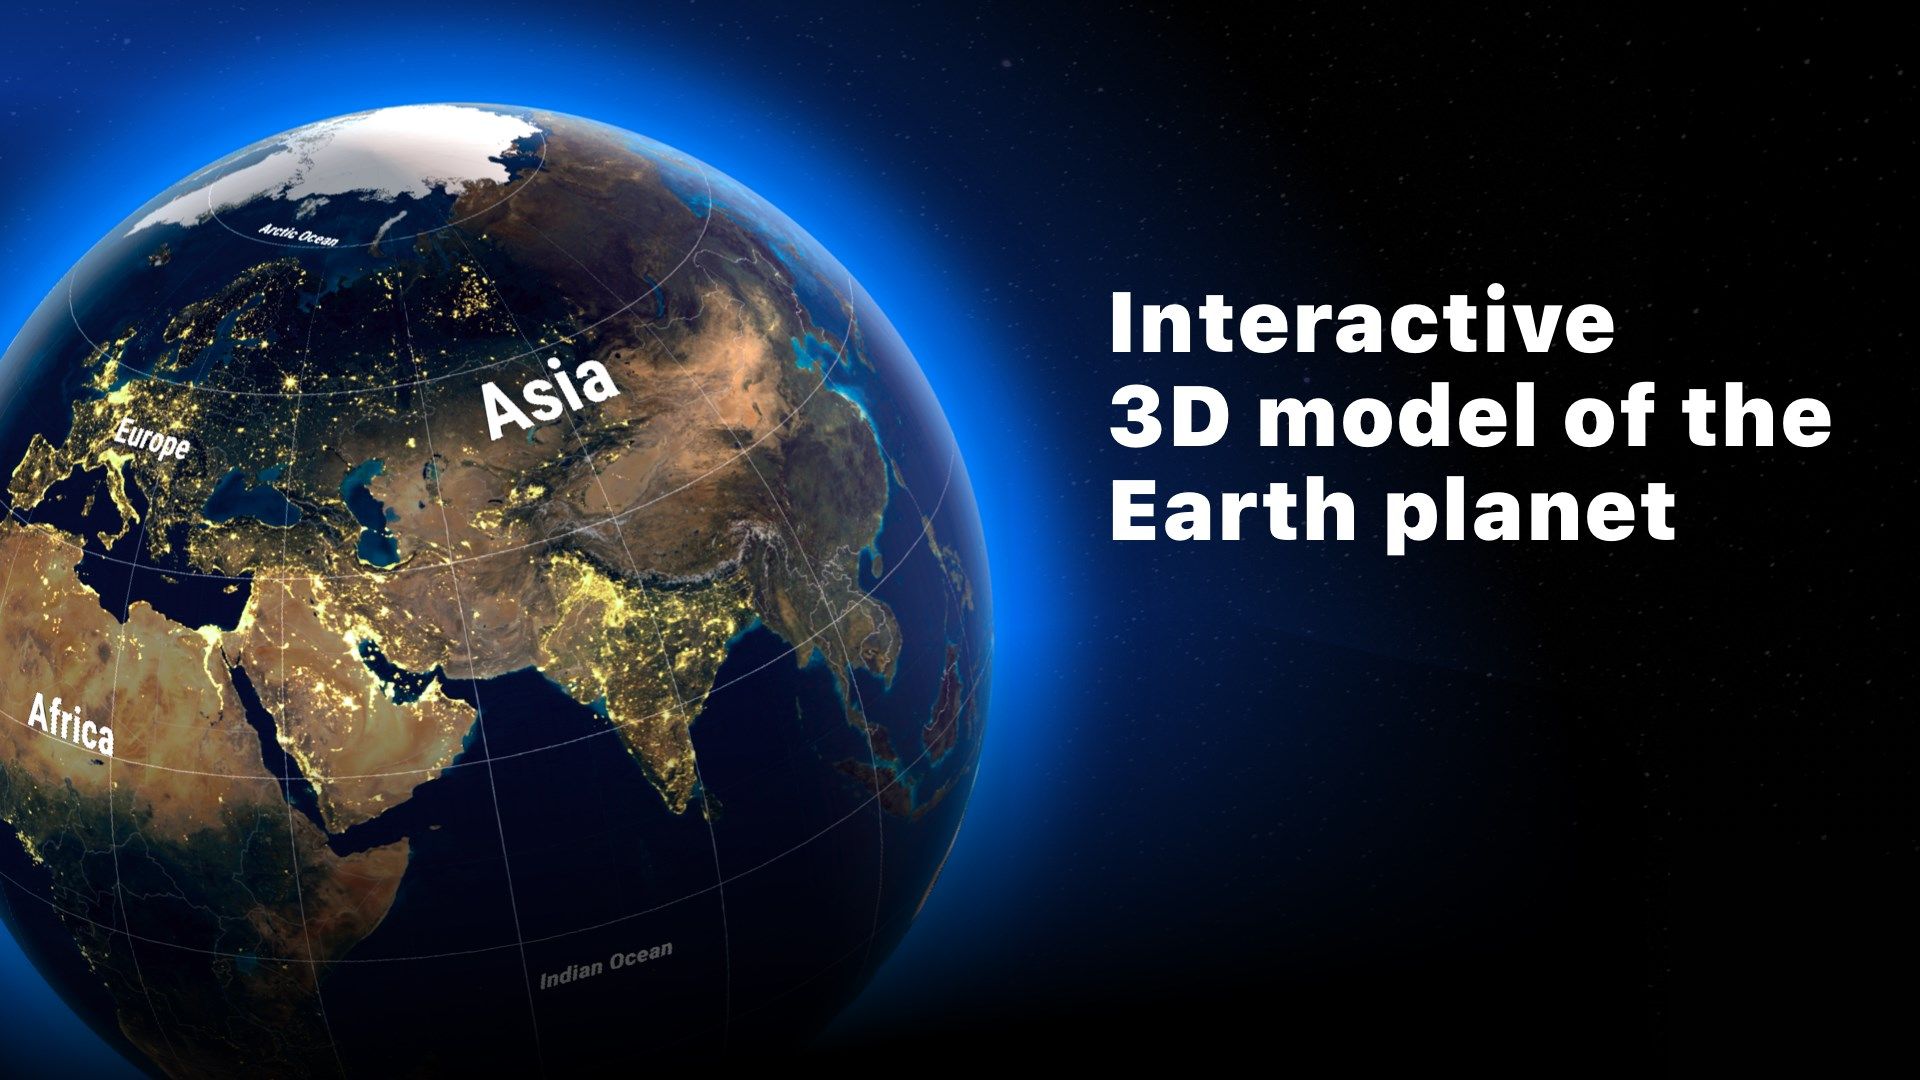 Globe 3D - Planet Earth & World Atlas